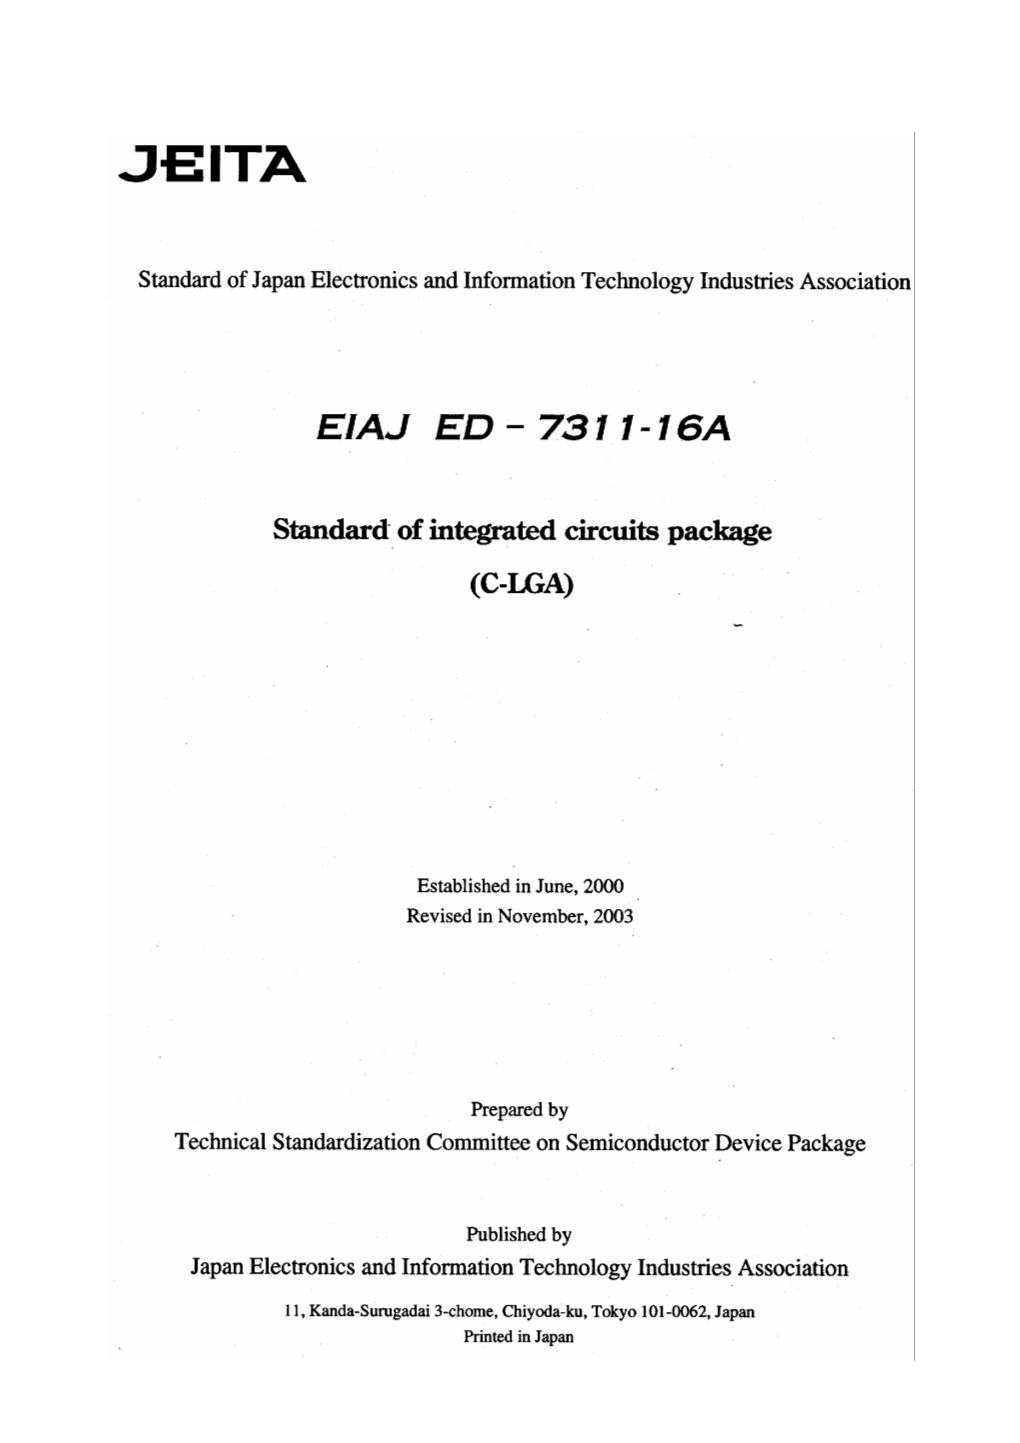 Standard of Integrated Circuits Package (C-LGA)